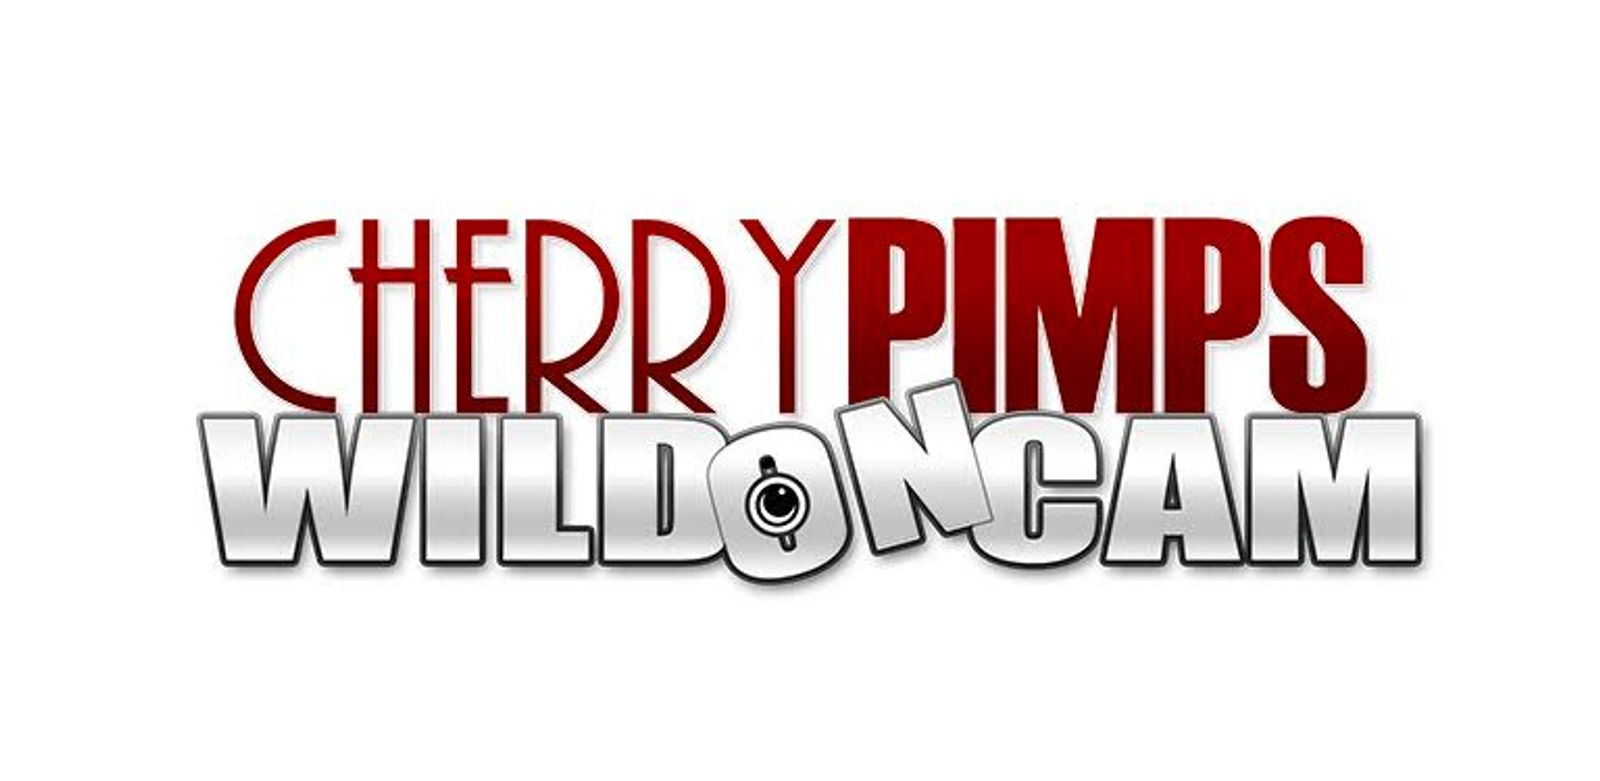 Cherry Pimps’ WildOnCam Announces Action Packed Week